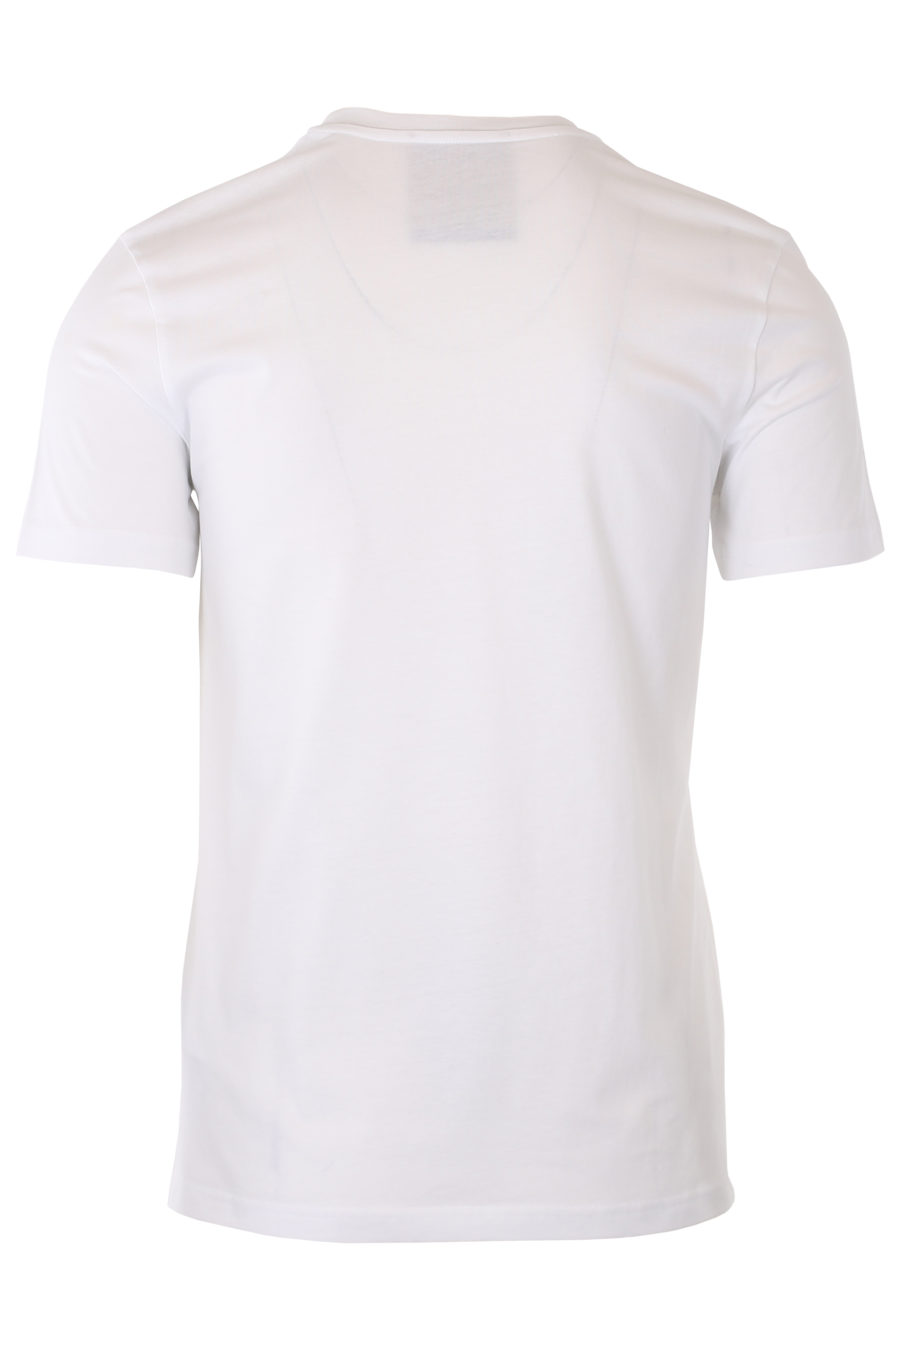 White T-shirt with black "fantasy" logo - IMG 9343